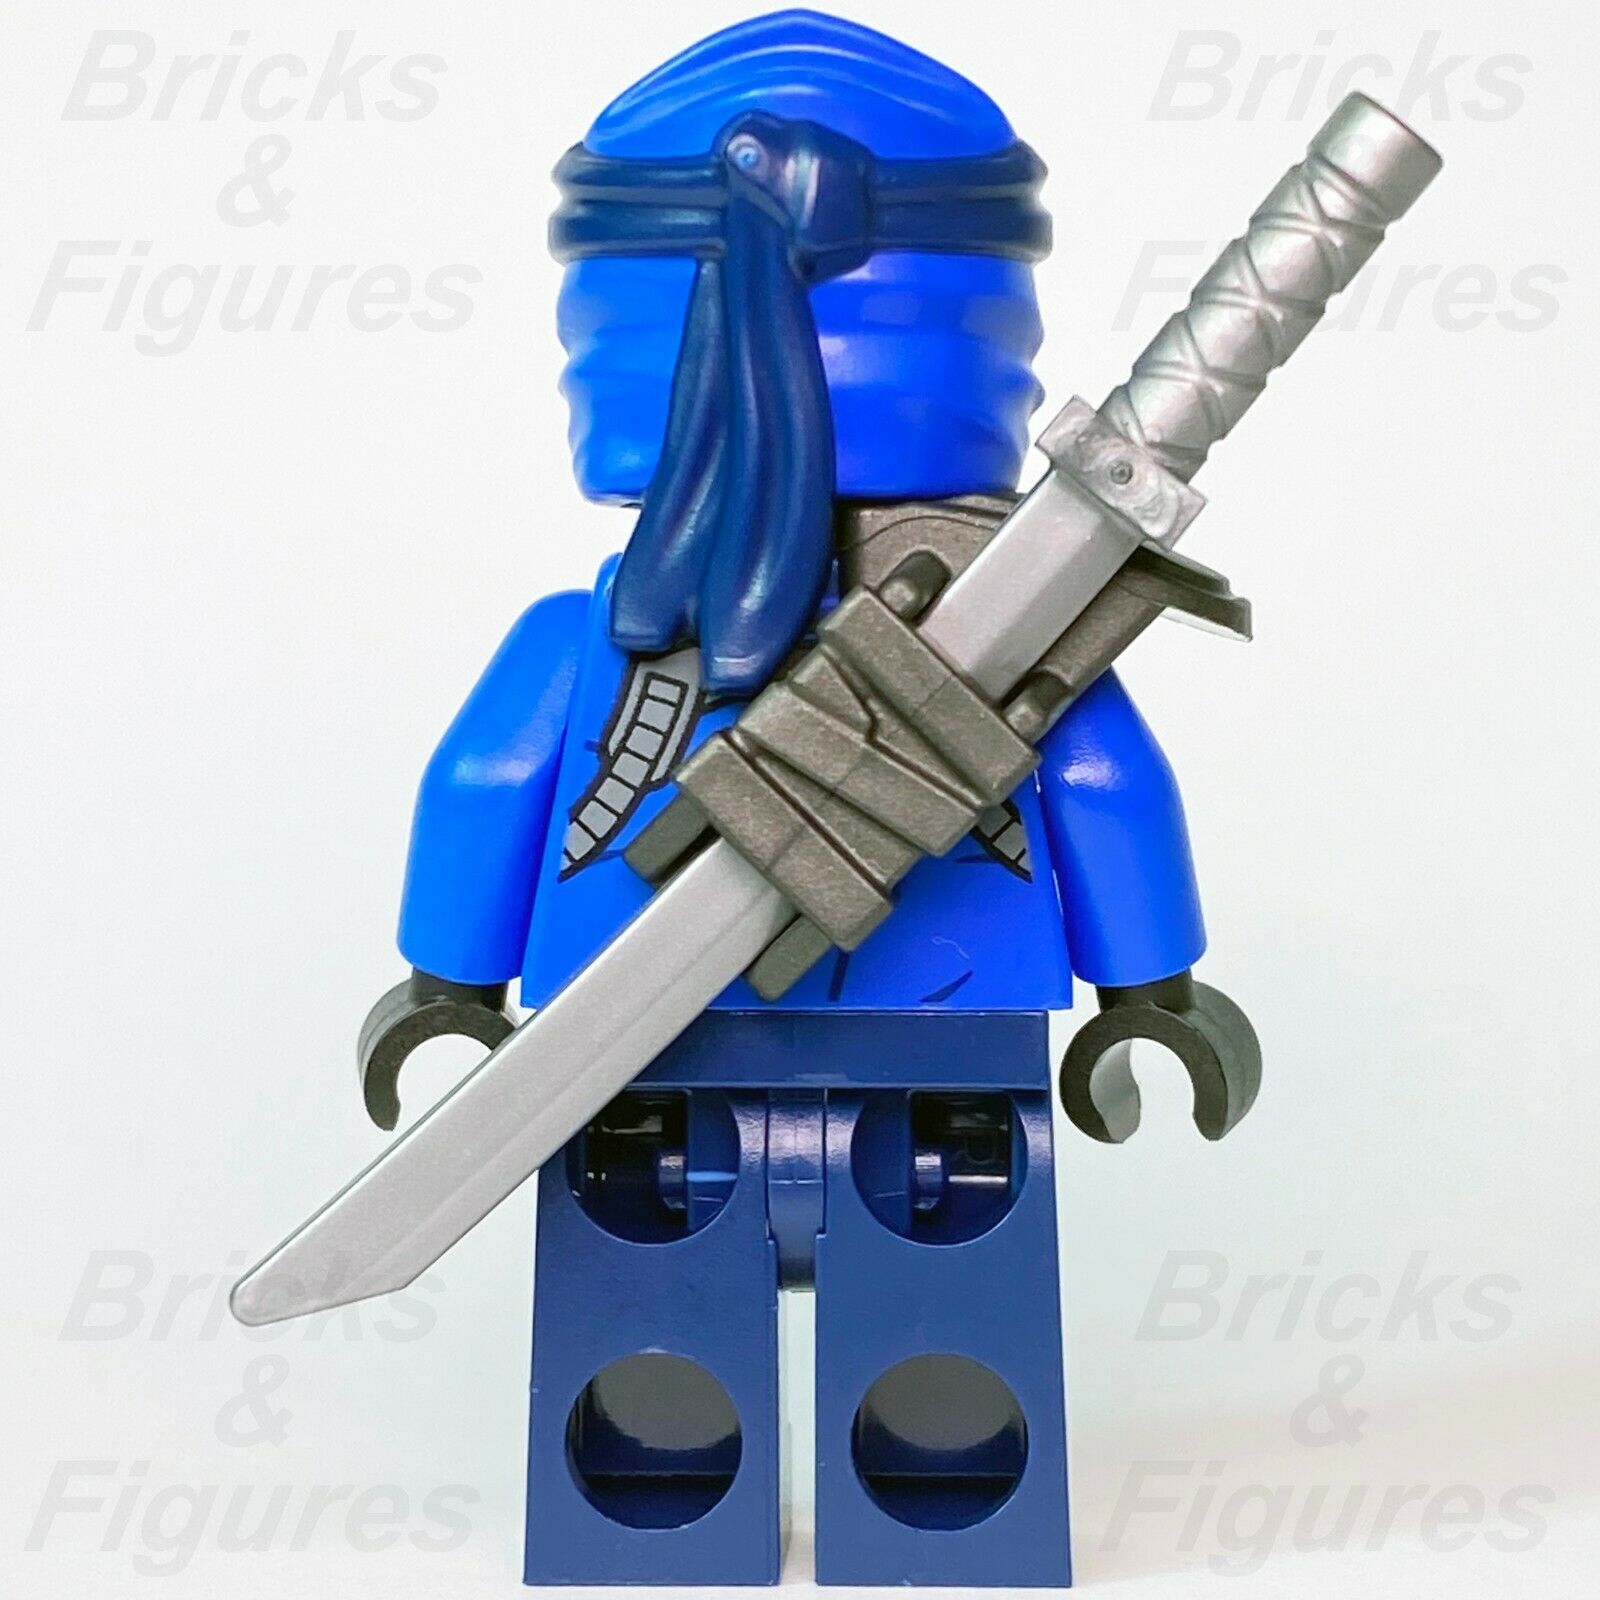 Ninjago LEGO® Jay Secret of the Forbidden Spinjitsu Blue Ninja Minifigure 70677 - Bricks & Figures